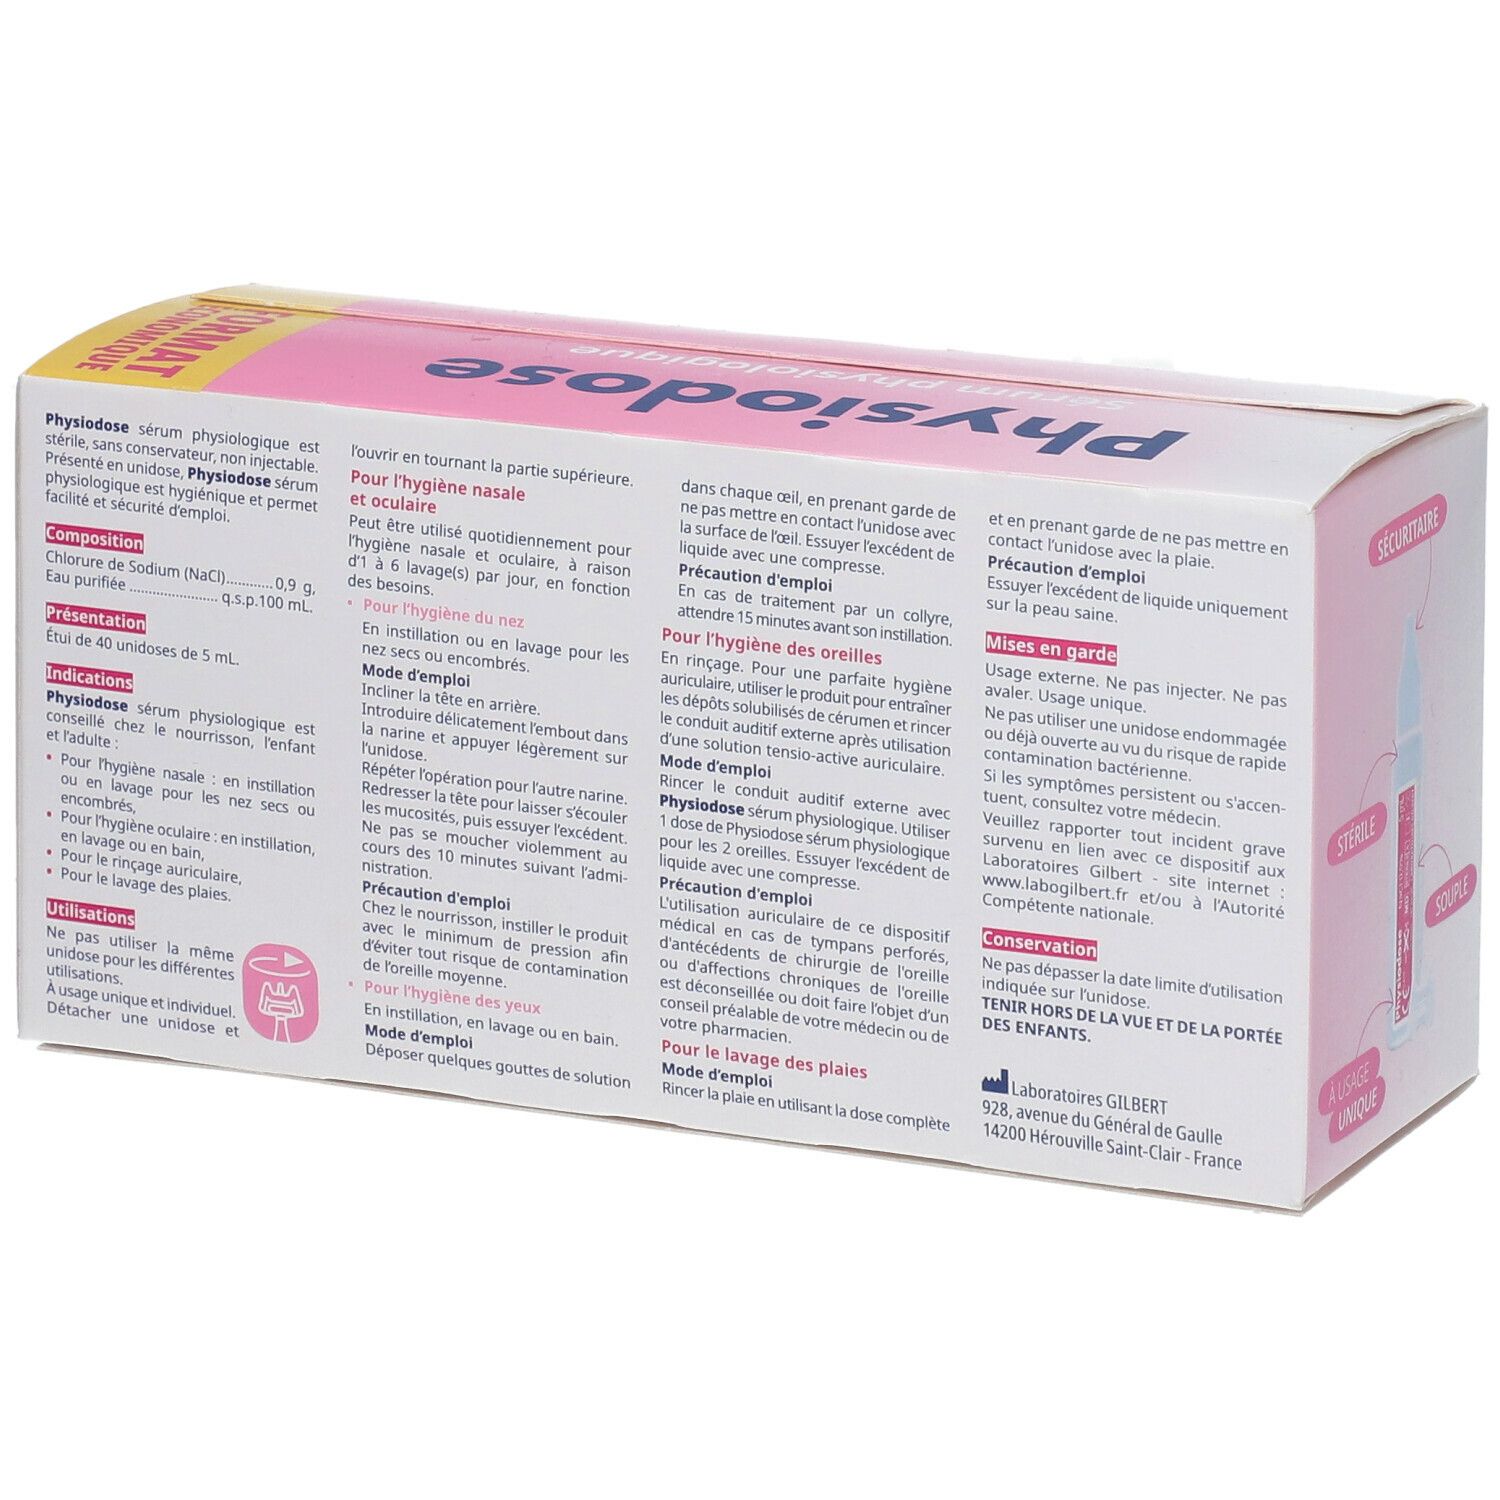 GILBERT Physiodose sérum physiologique stérile 30 unidoses de 10ml -  Parapharmacie - Pharmarket